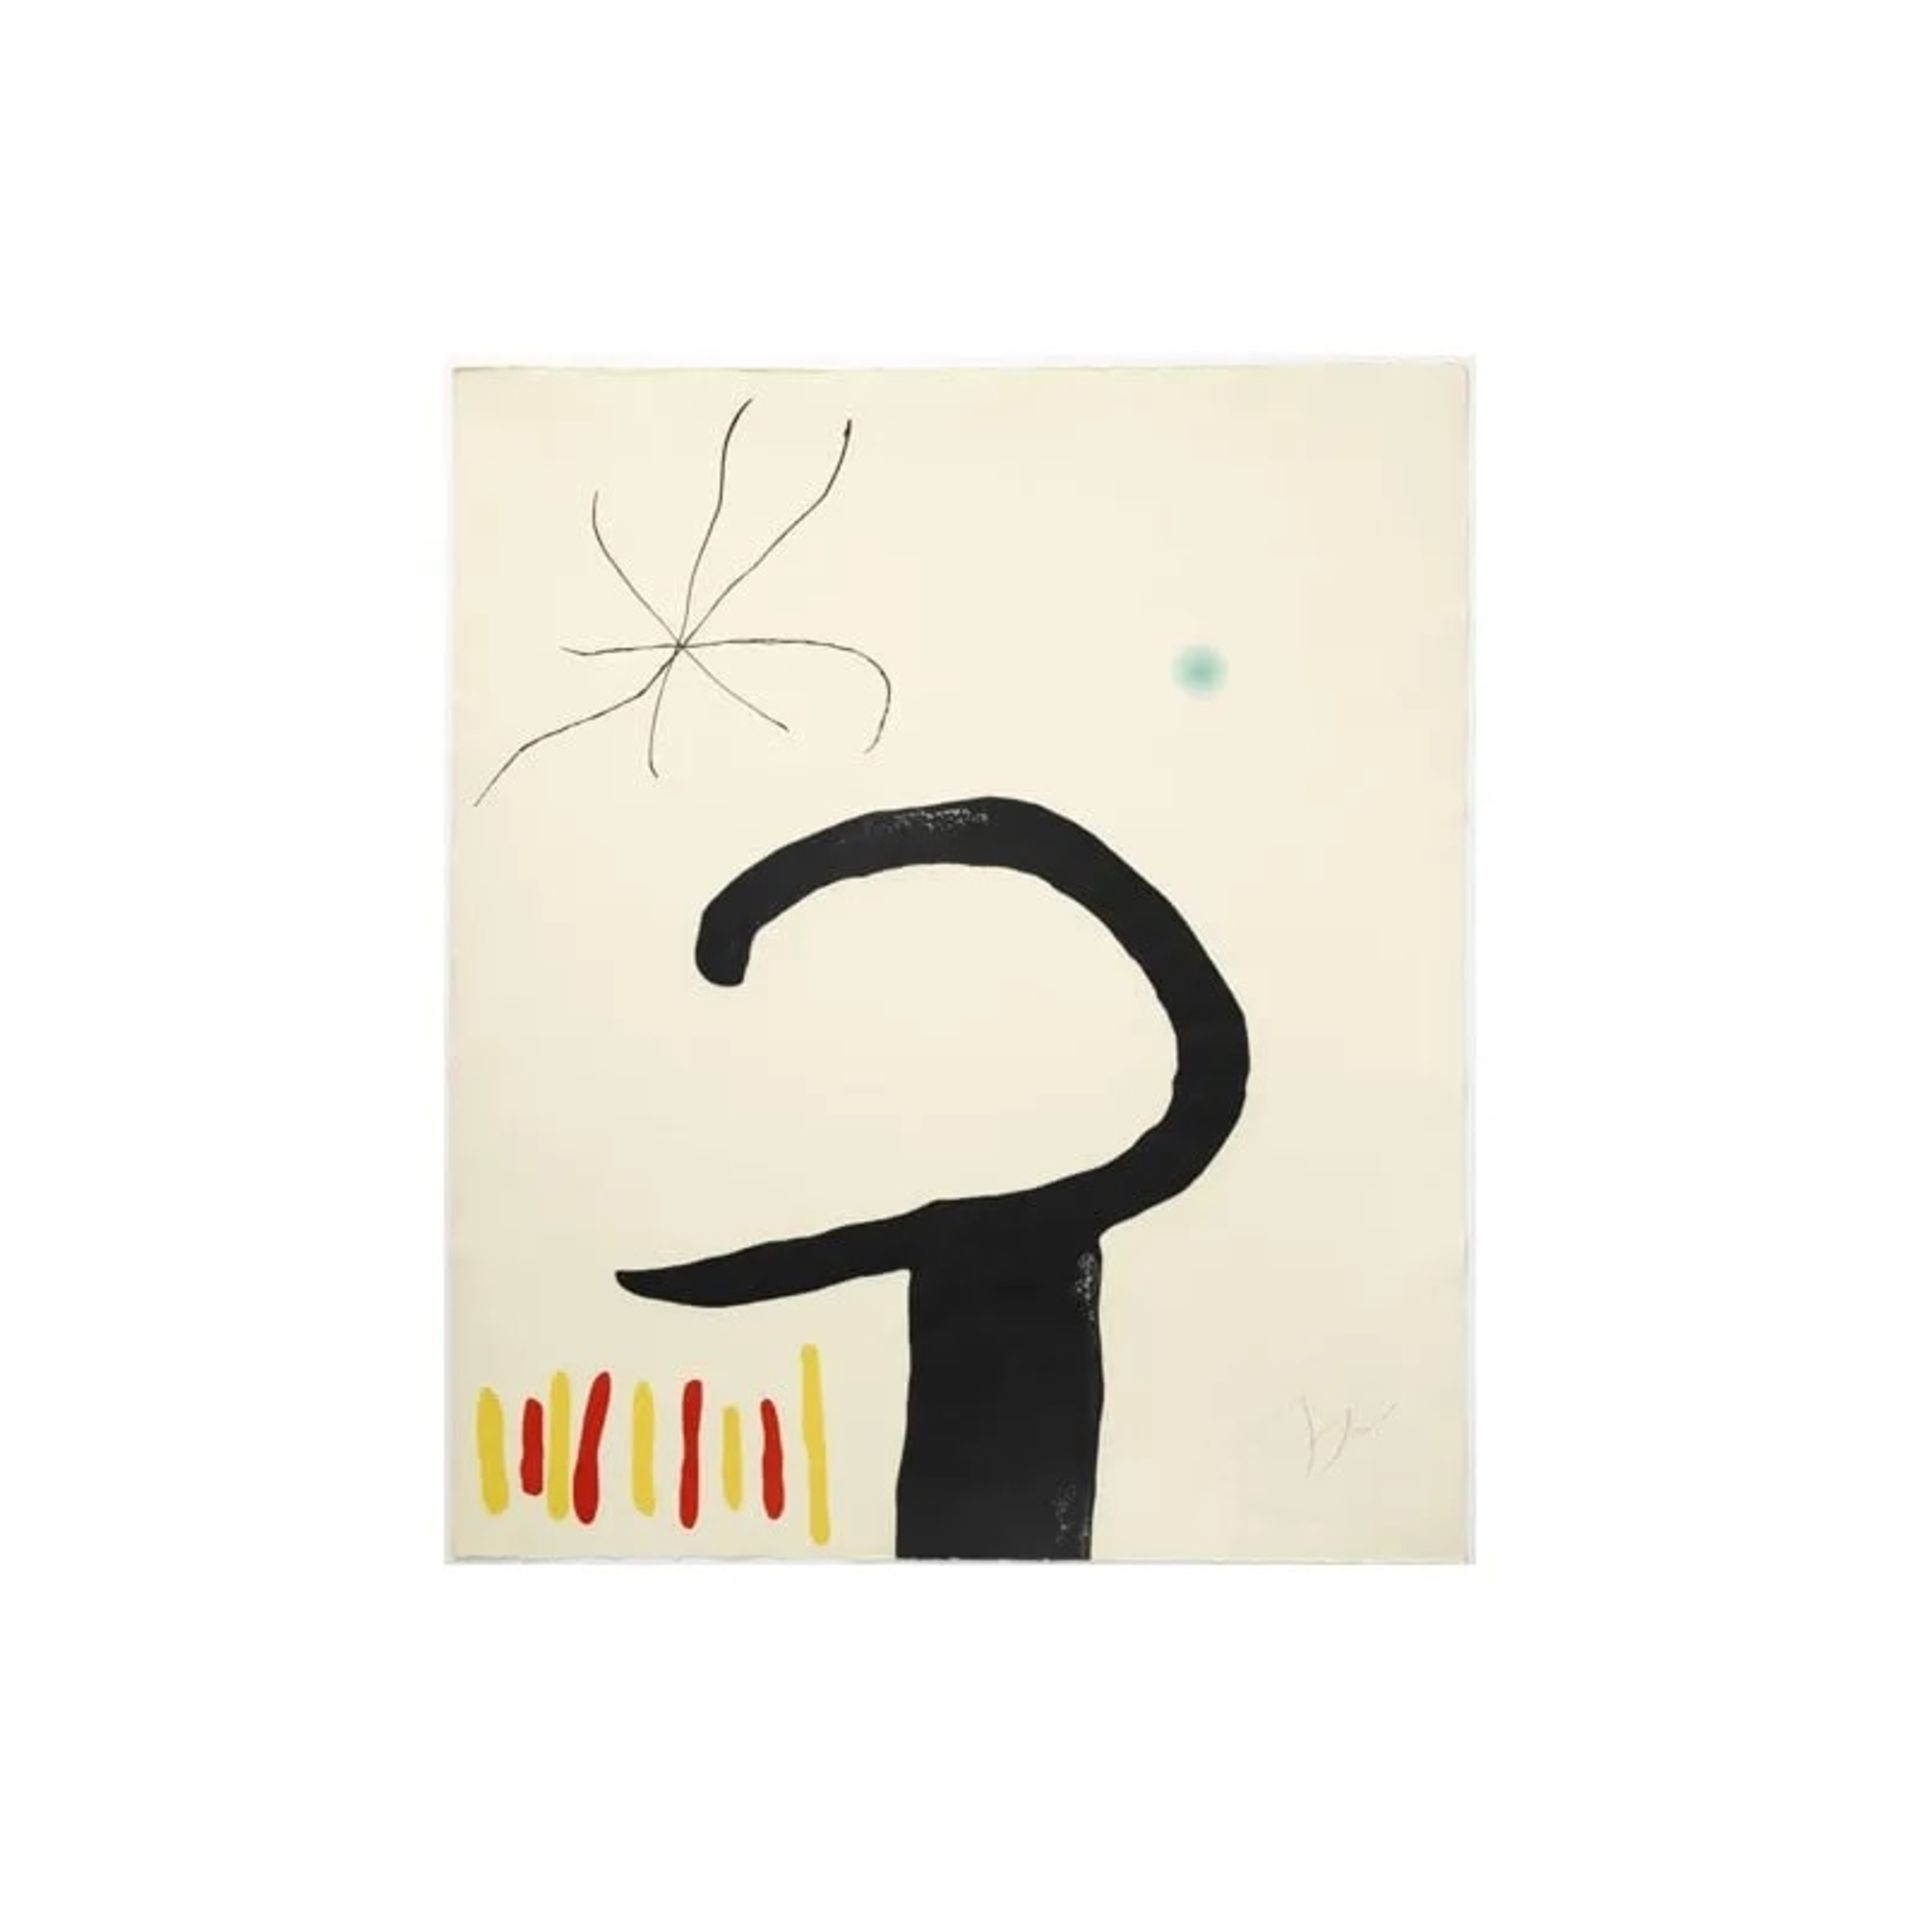 Joan Miro "Espriu, 1975" Screenprint